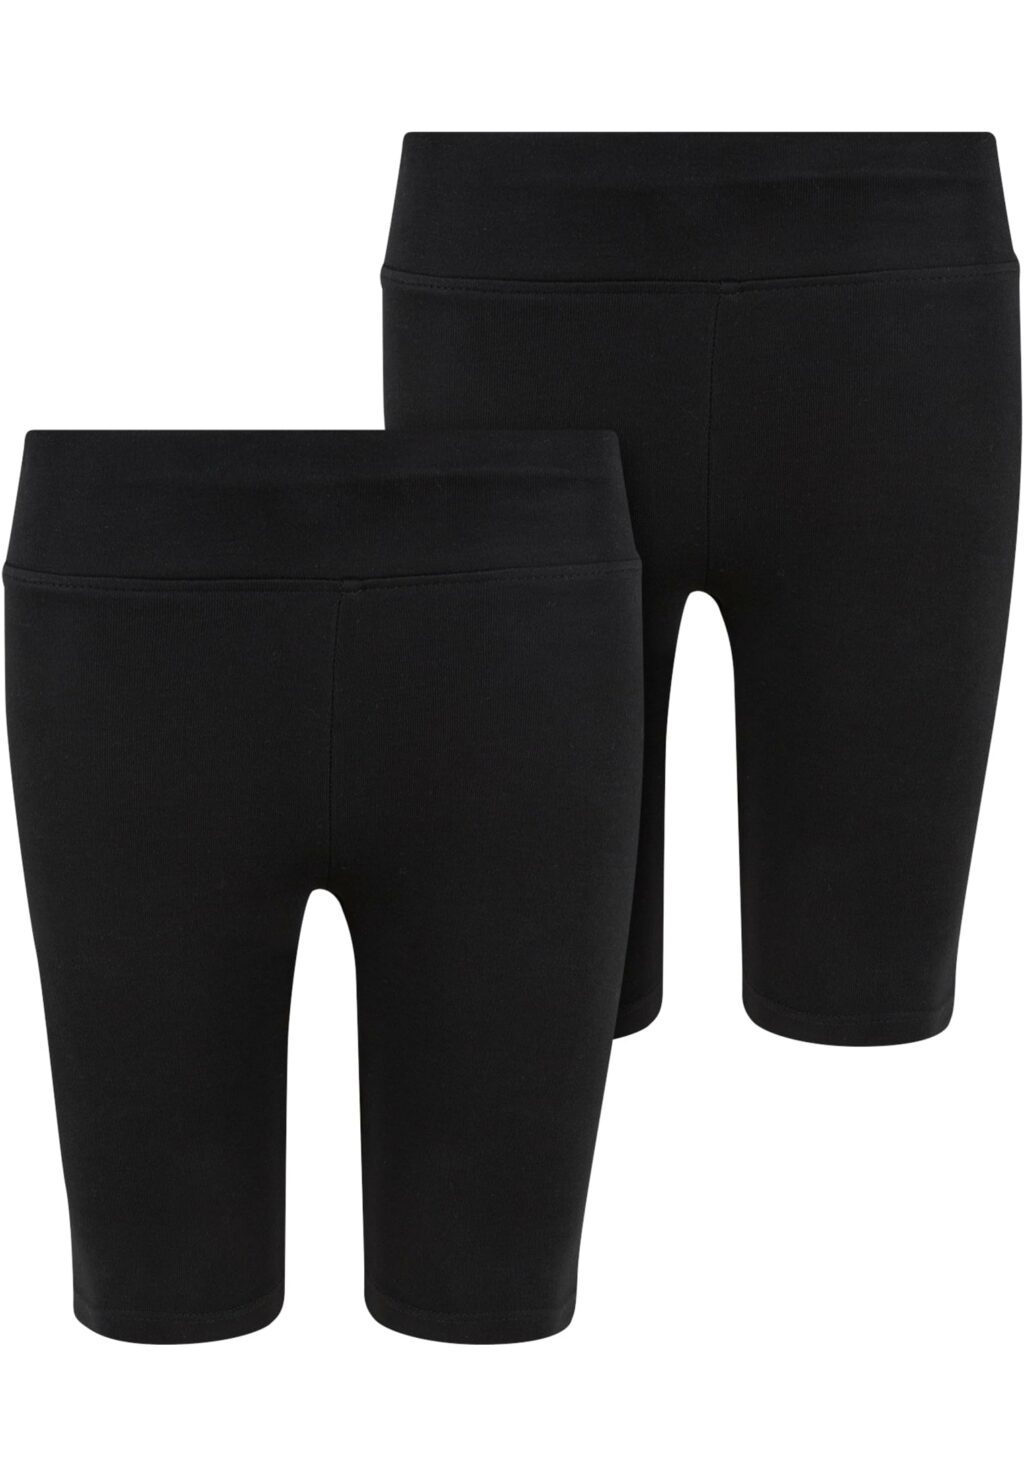 Girls High Waist Cycle Shorts 2-Pack black+black UCK2632A